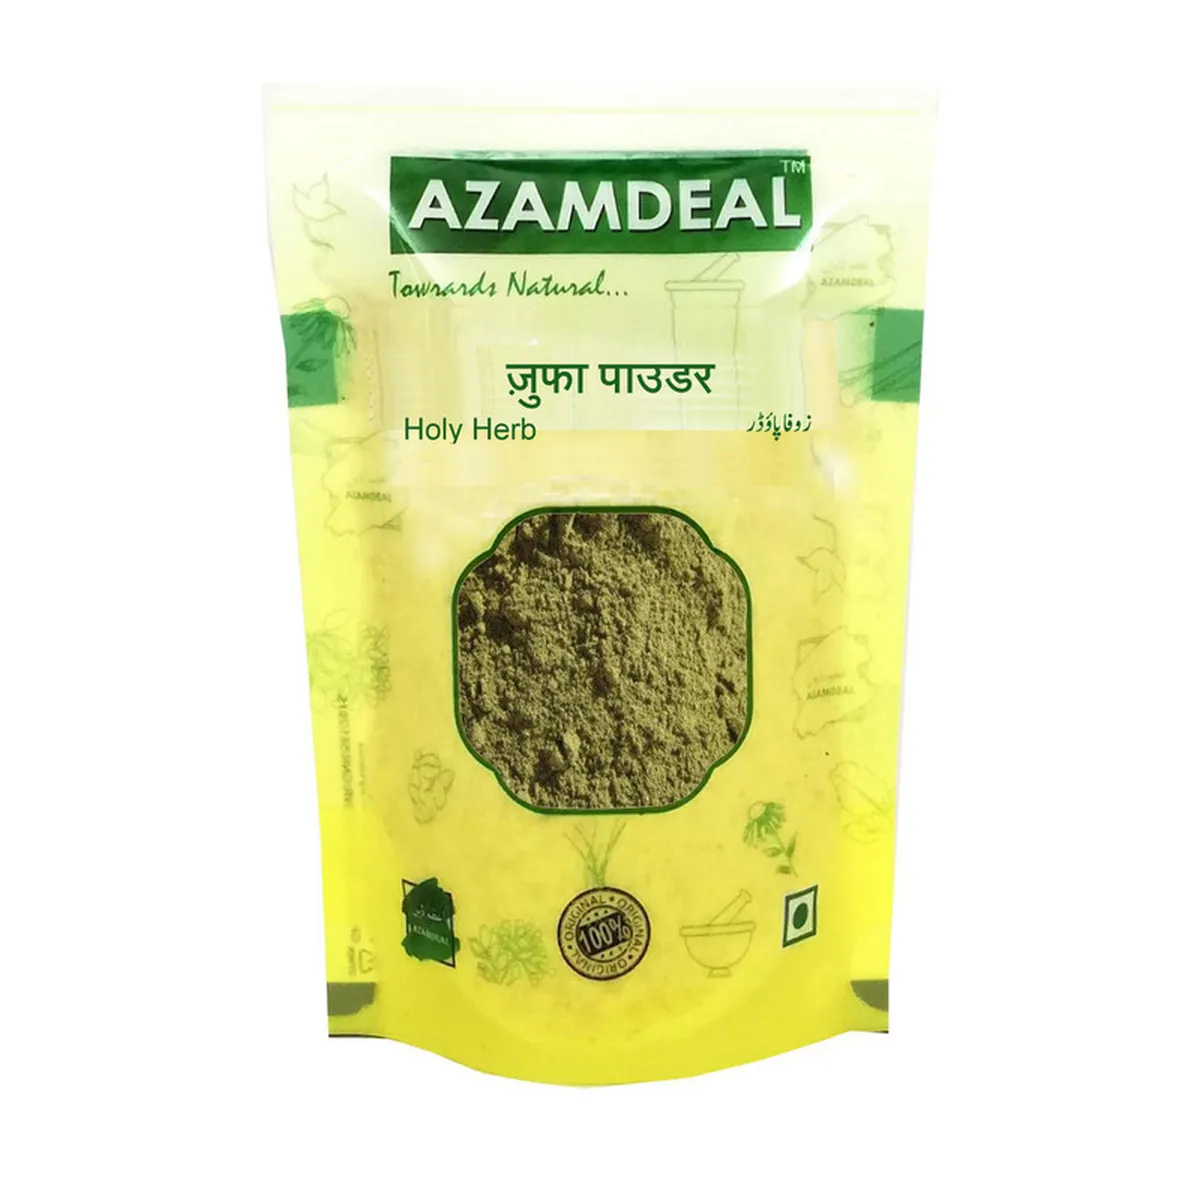 Azamdeal Zufa Powder 200g